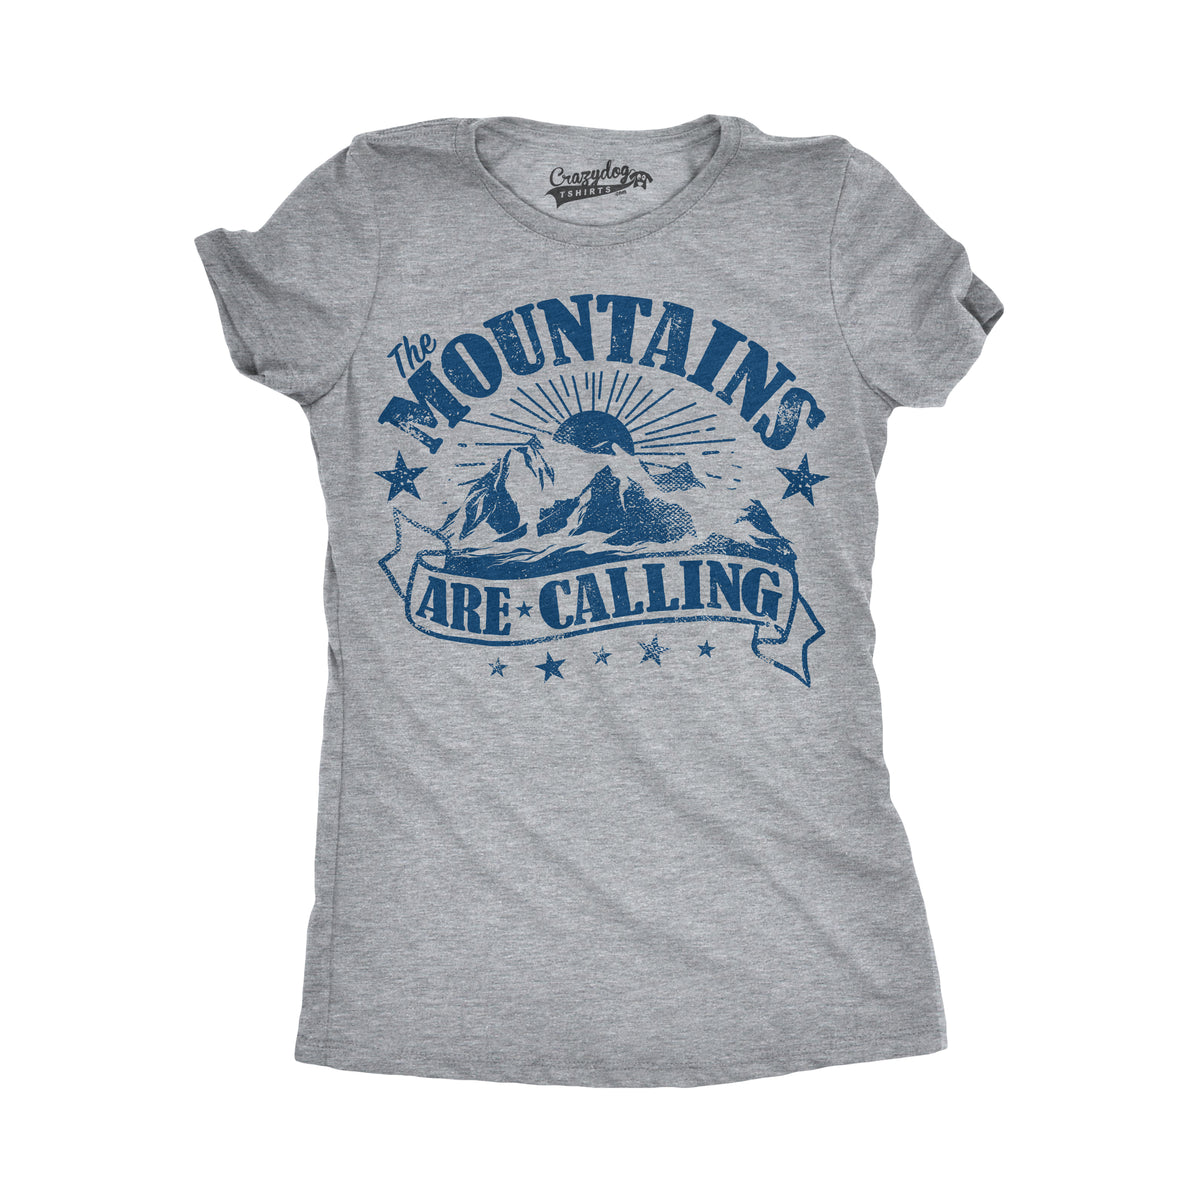 Funny Light Heather Grey Womens T Shirt Nerdy Camping Retro hiking Tee